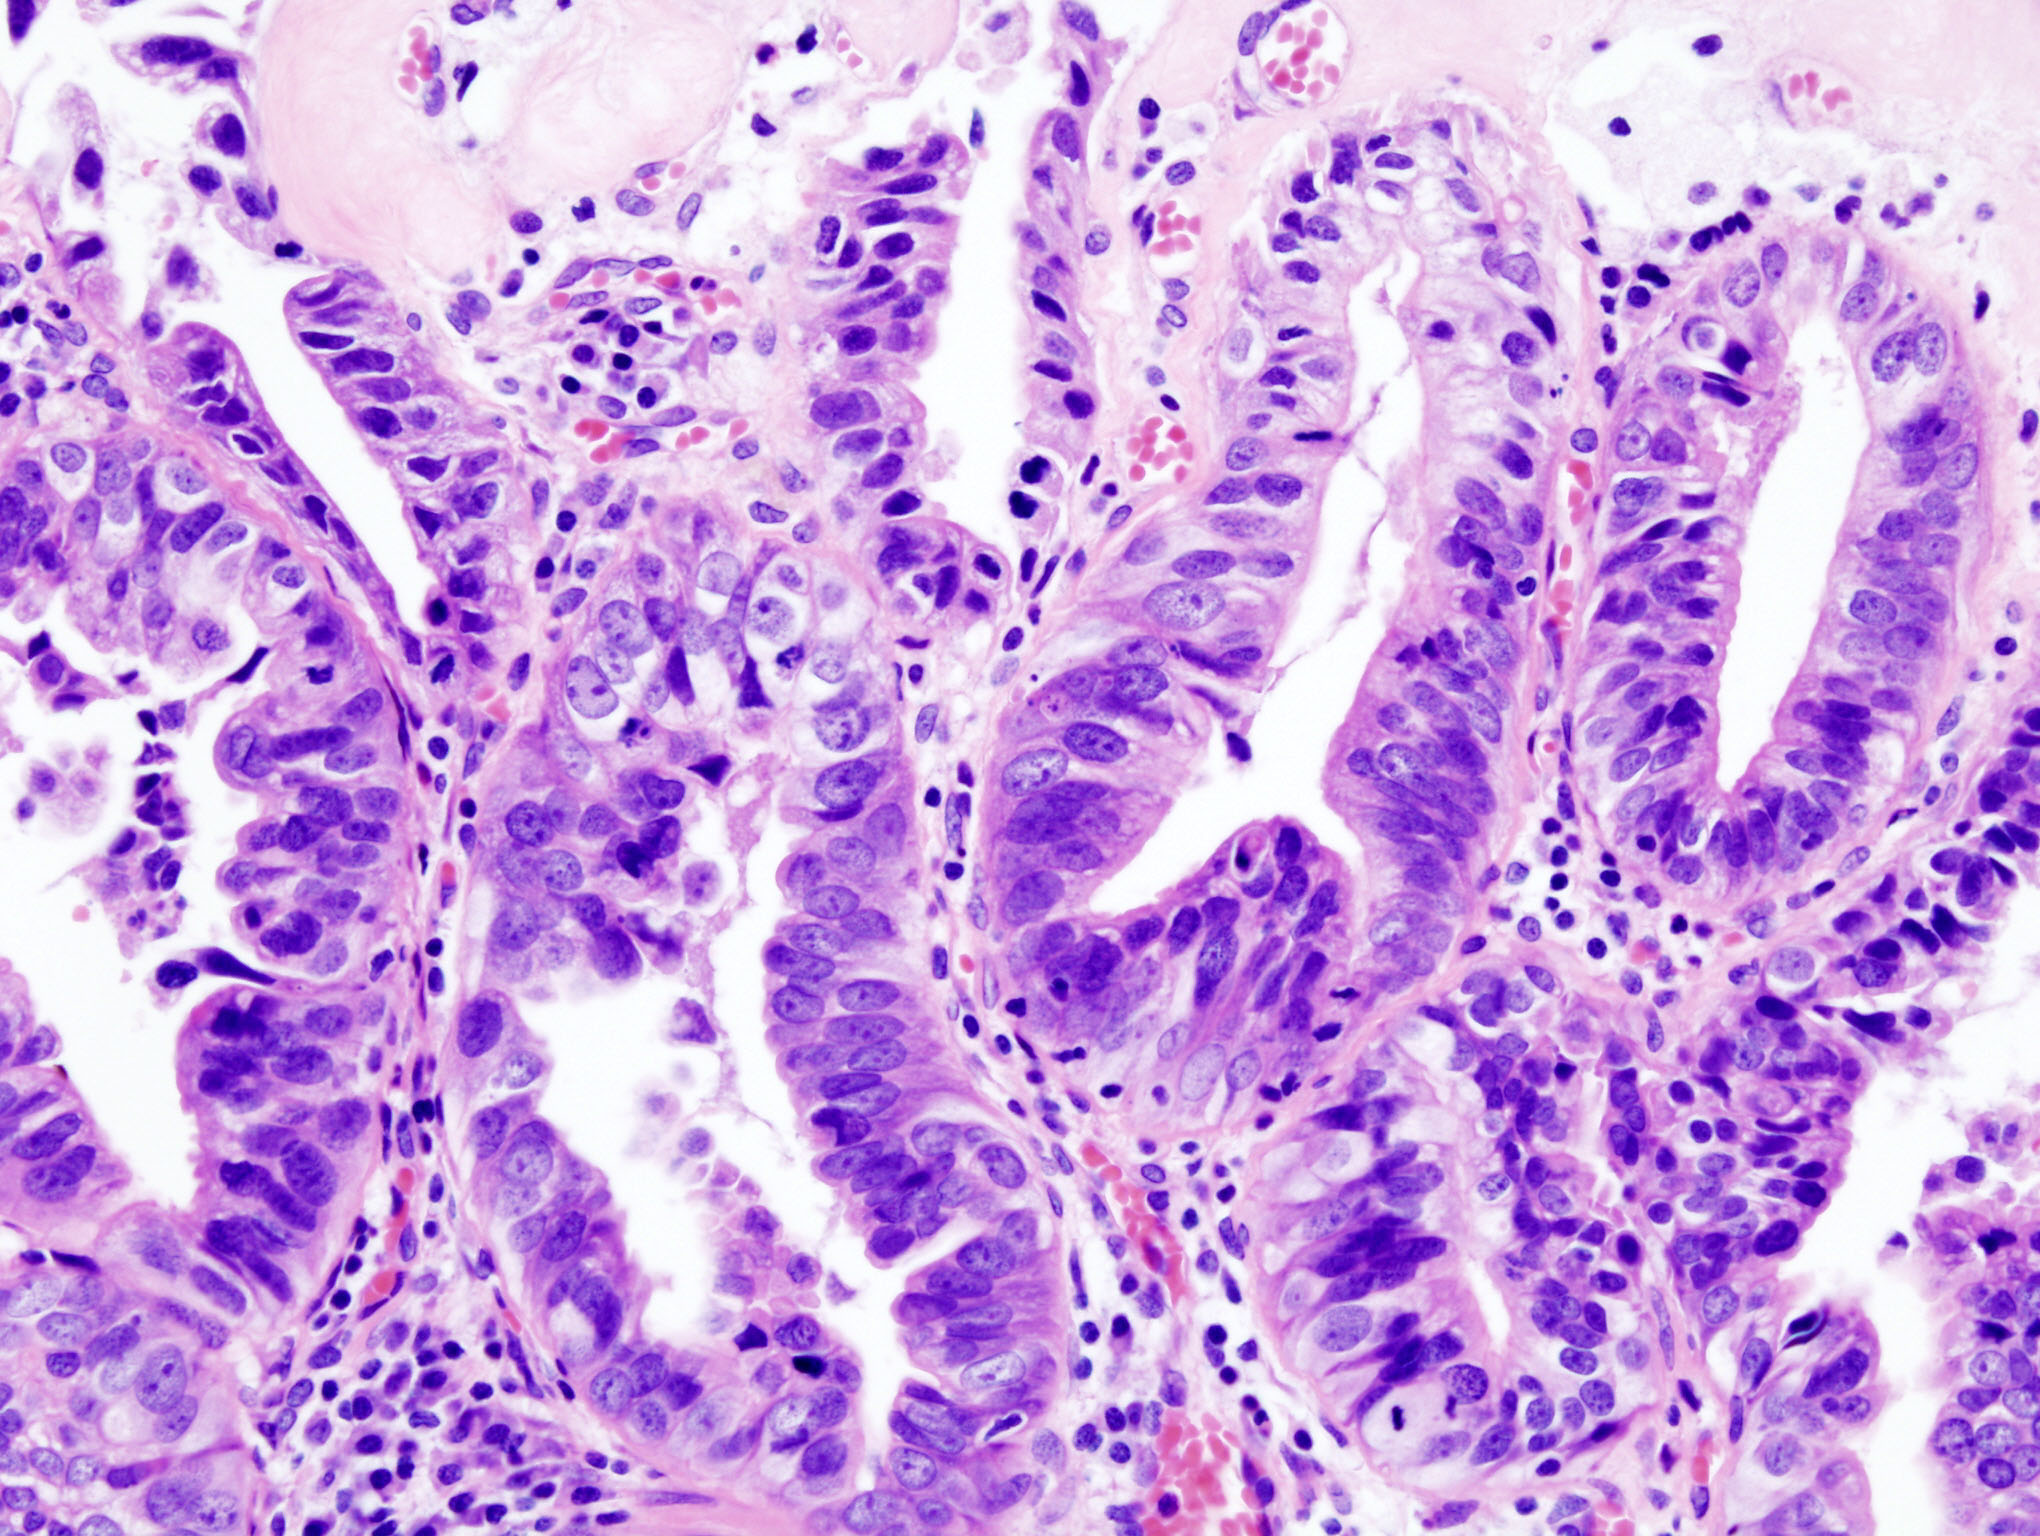 Gallbladder adenocarcinoma histopathology